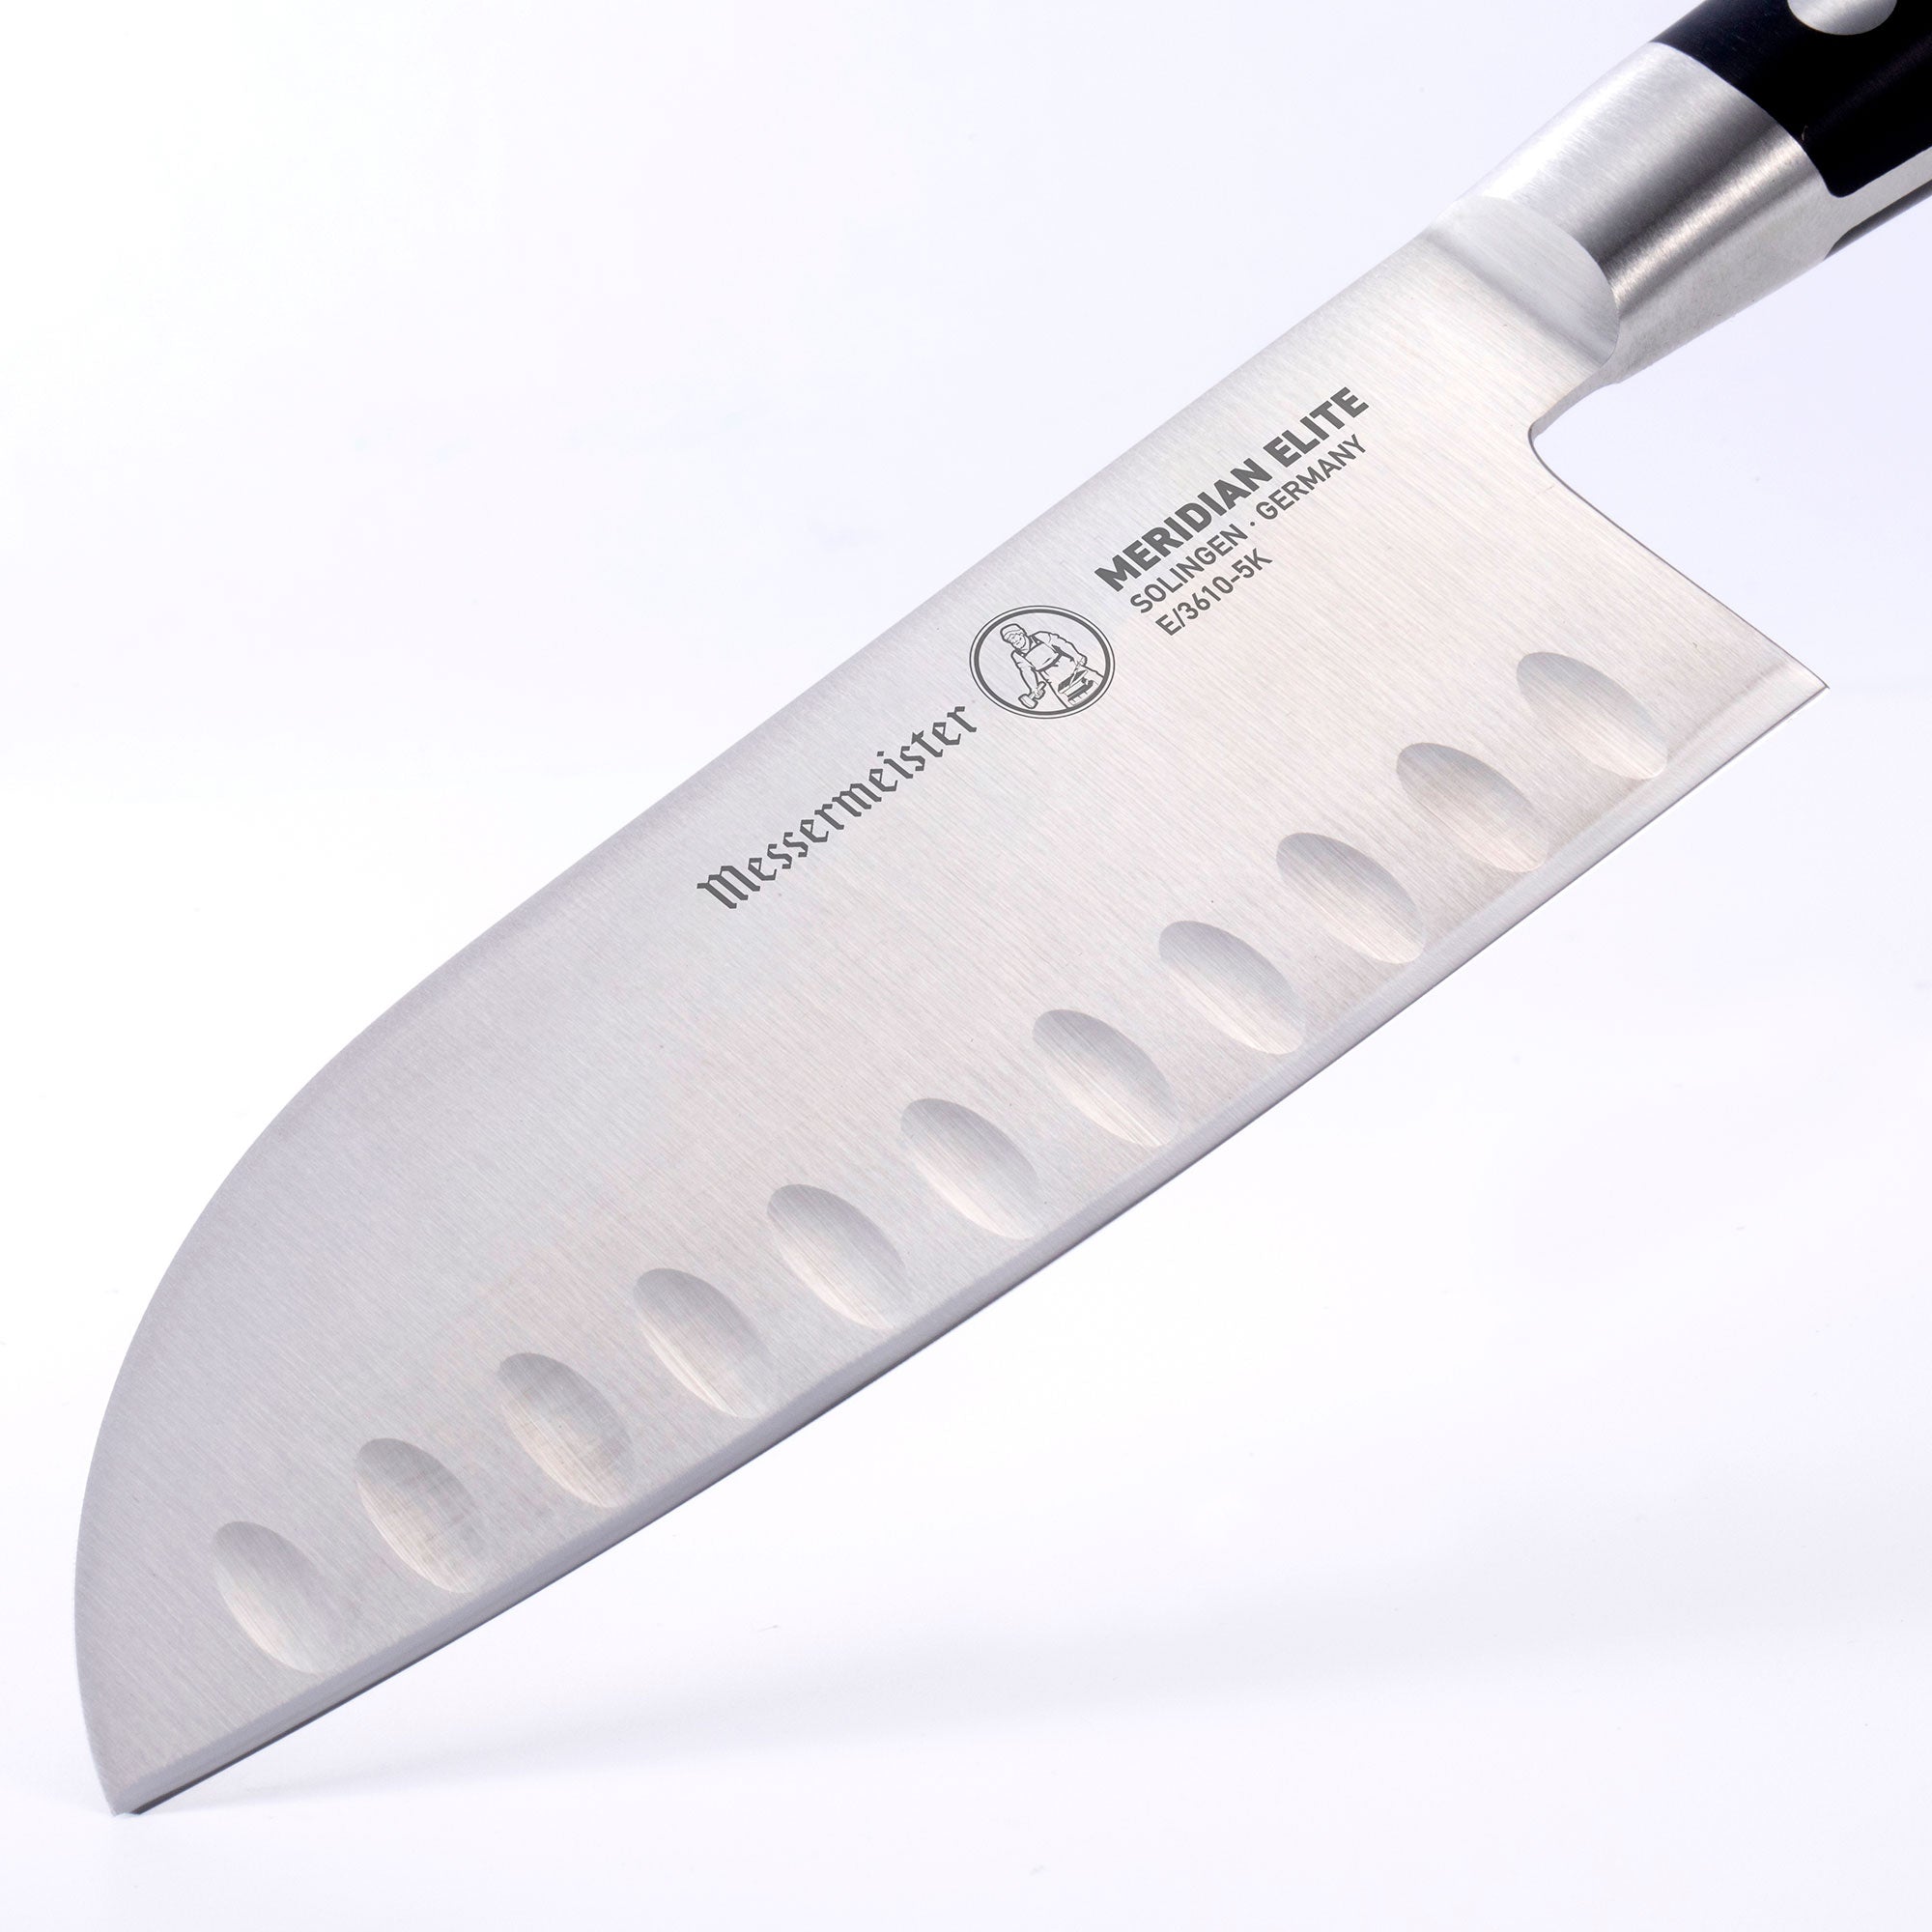 Messermeister Meridian Elite - 7 Kullenschliff Vegetable Knife